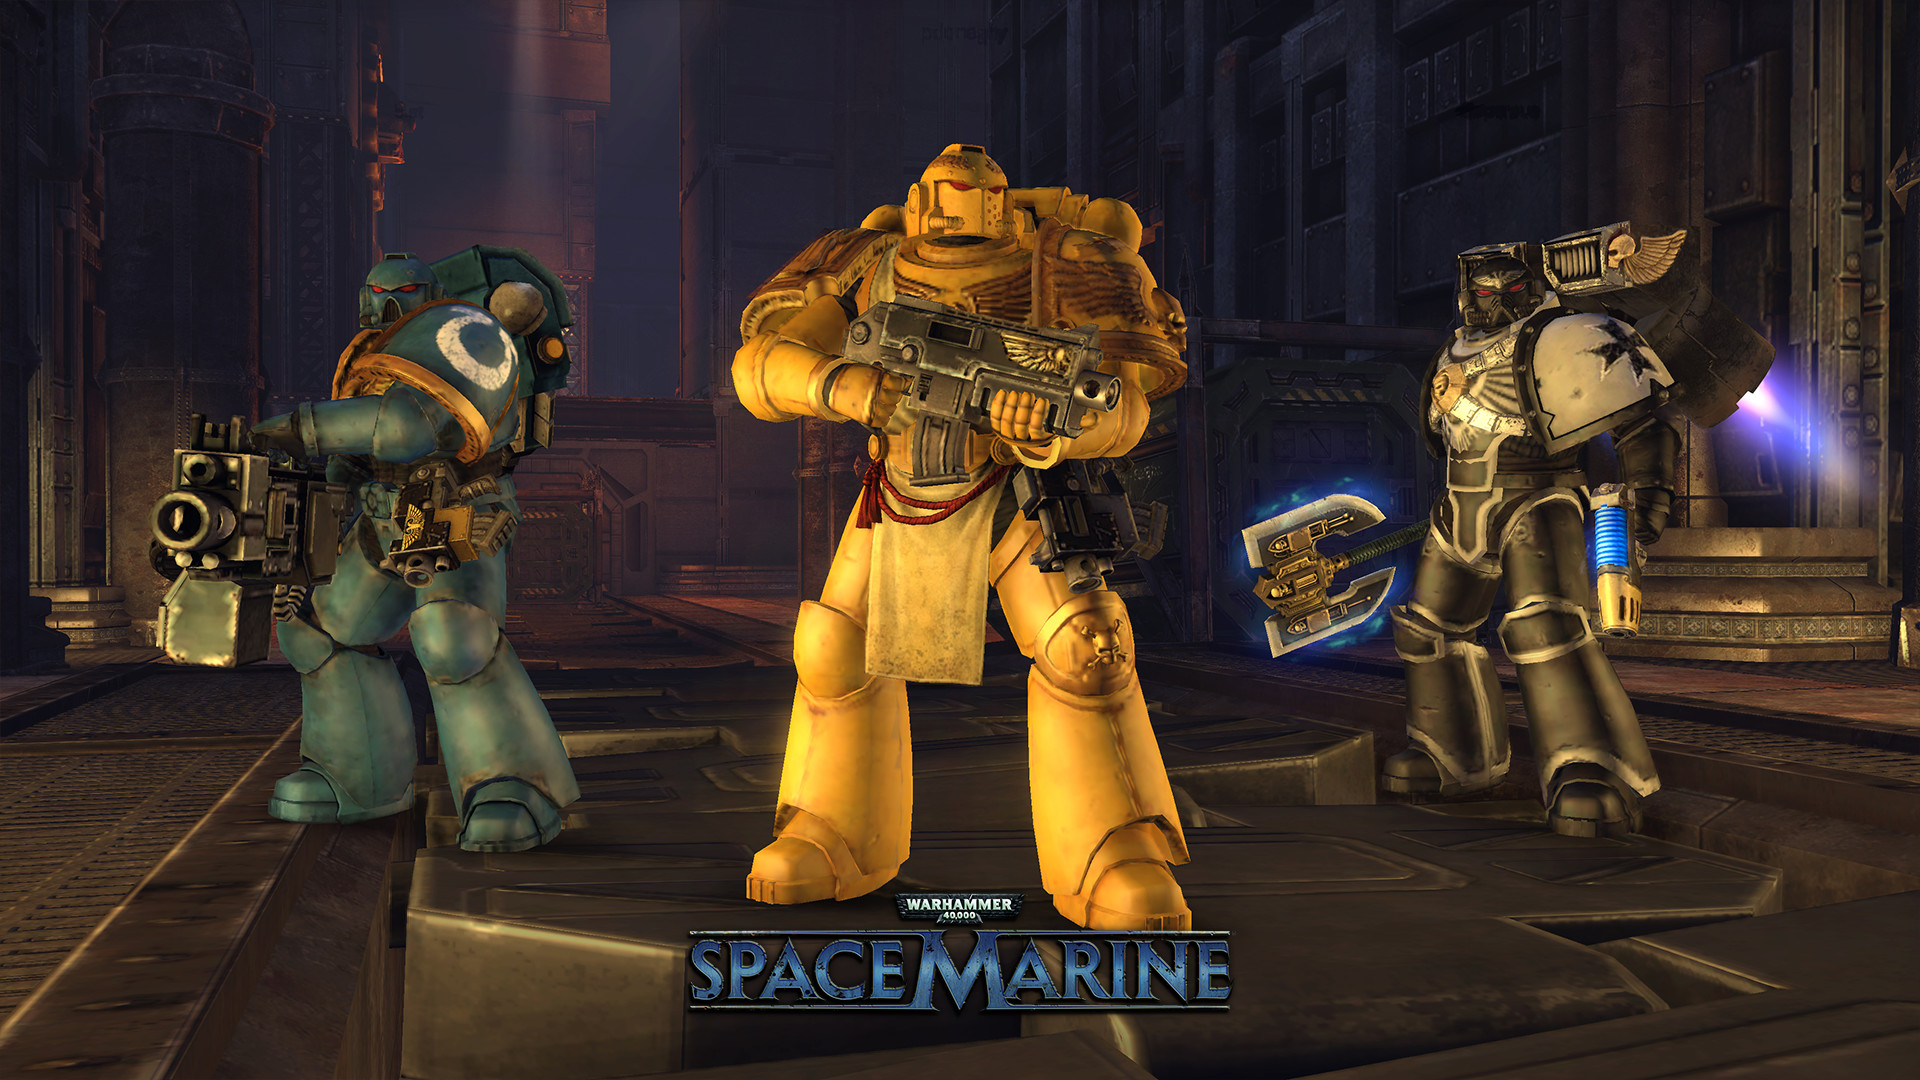 Warhammer 40,000: Space Marine - Anniversary Edition English Language Only Steam CD Key